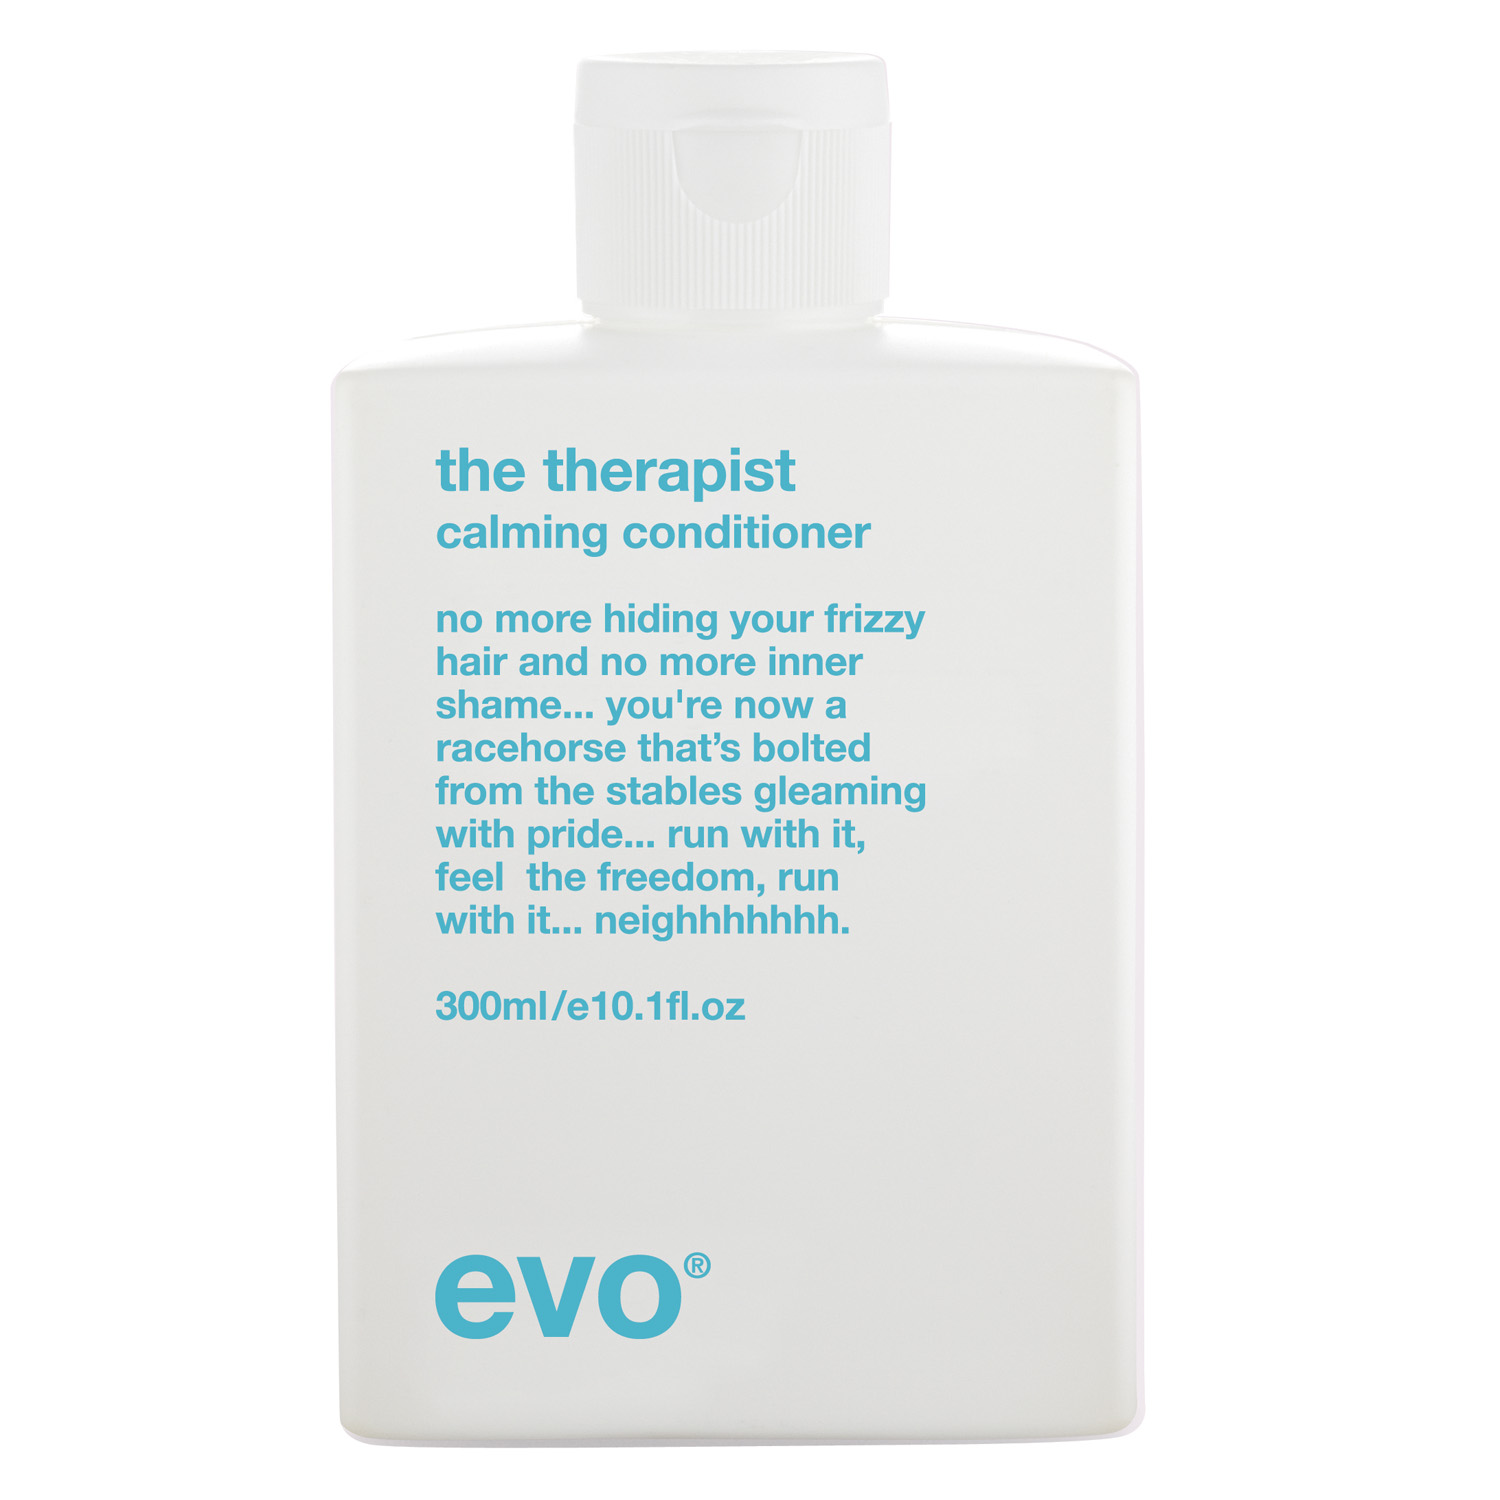 EVO Увлажняющий кондиционер [терапевт] Hydrating Conditioner, 300 мл (EVO, the therapist) цена и фото